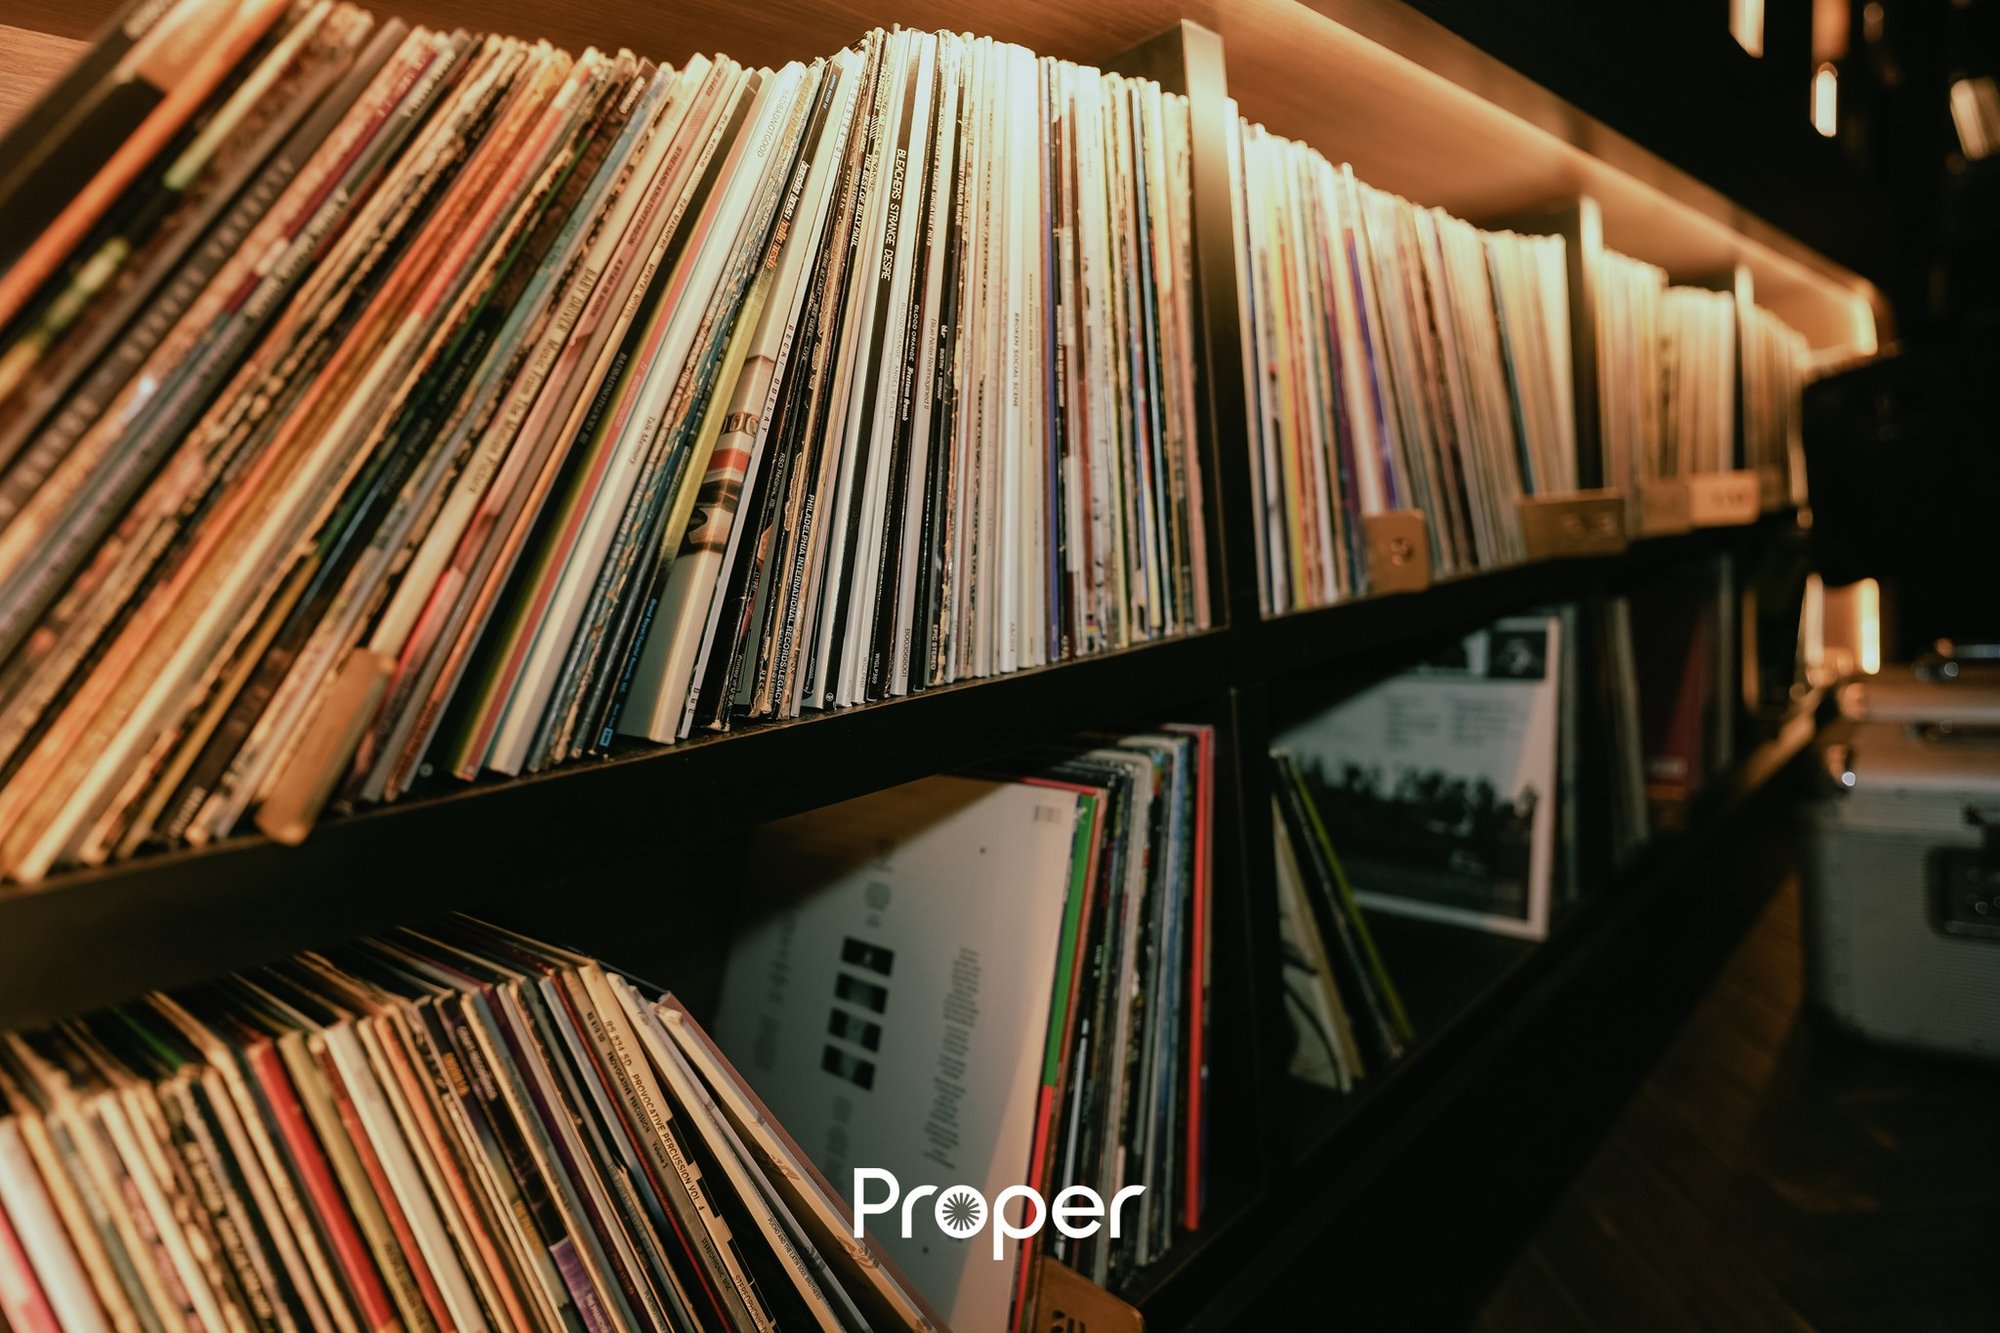 Shelves of vinyl records in Proper